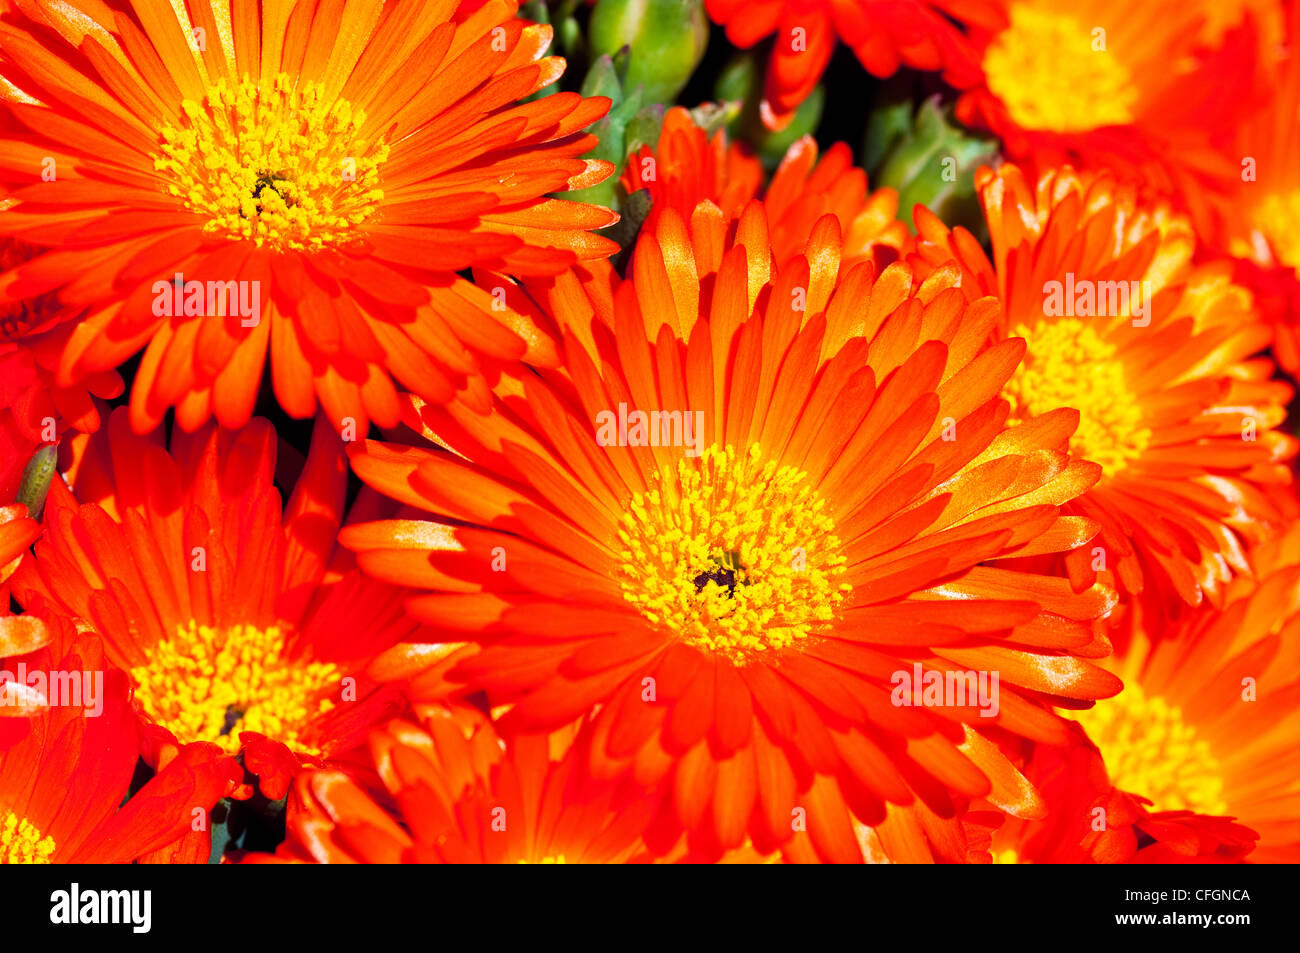 A cluster of bright orange Mesembryanthemum flower petals in the sun. Stock Photo